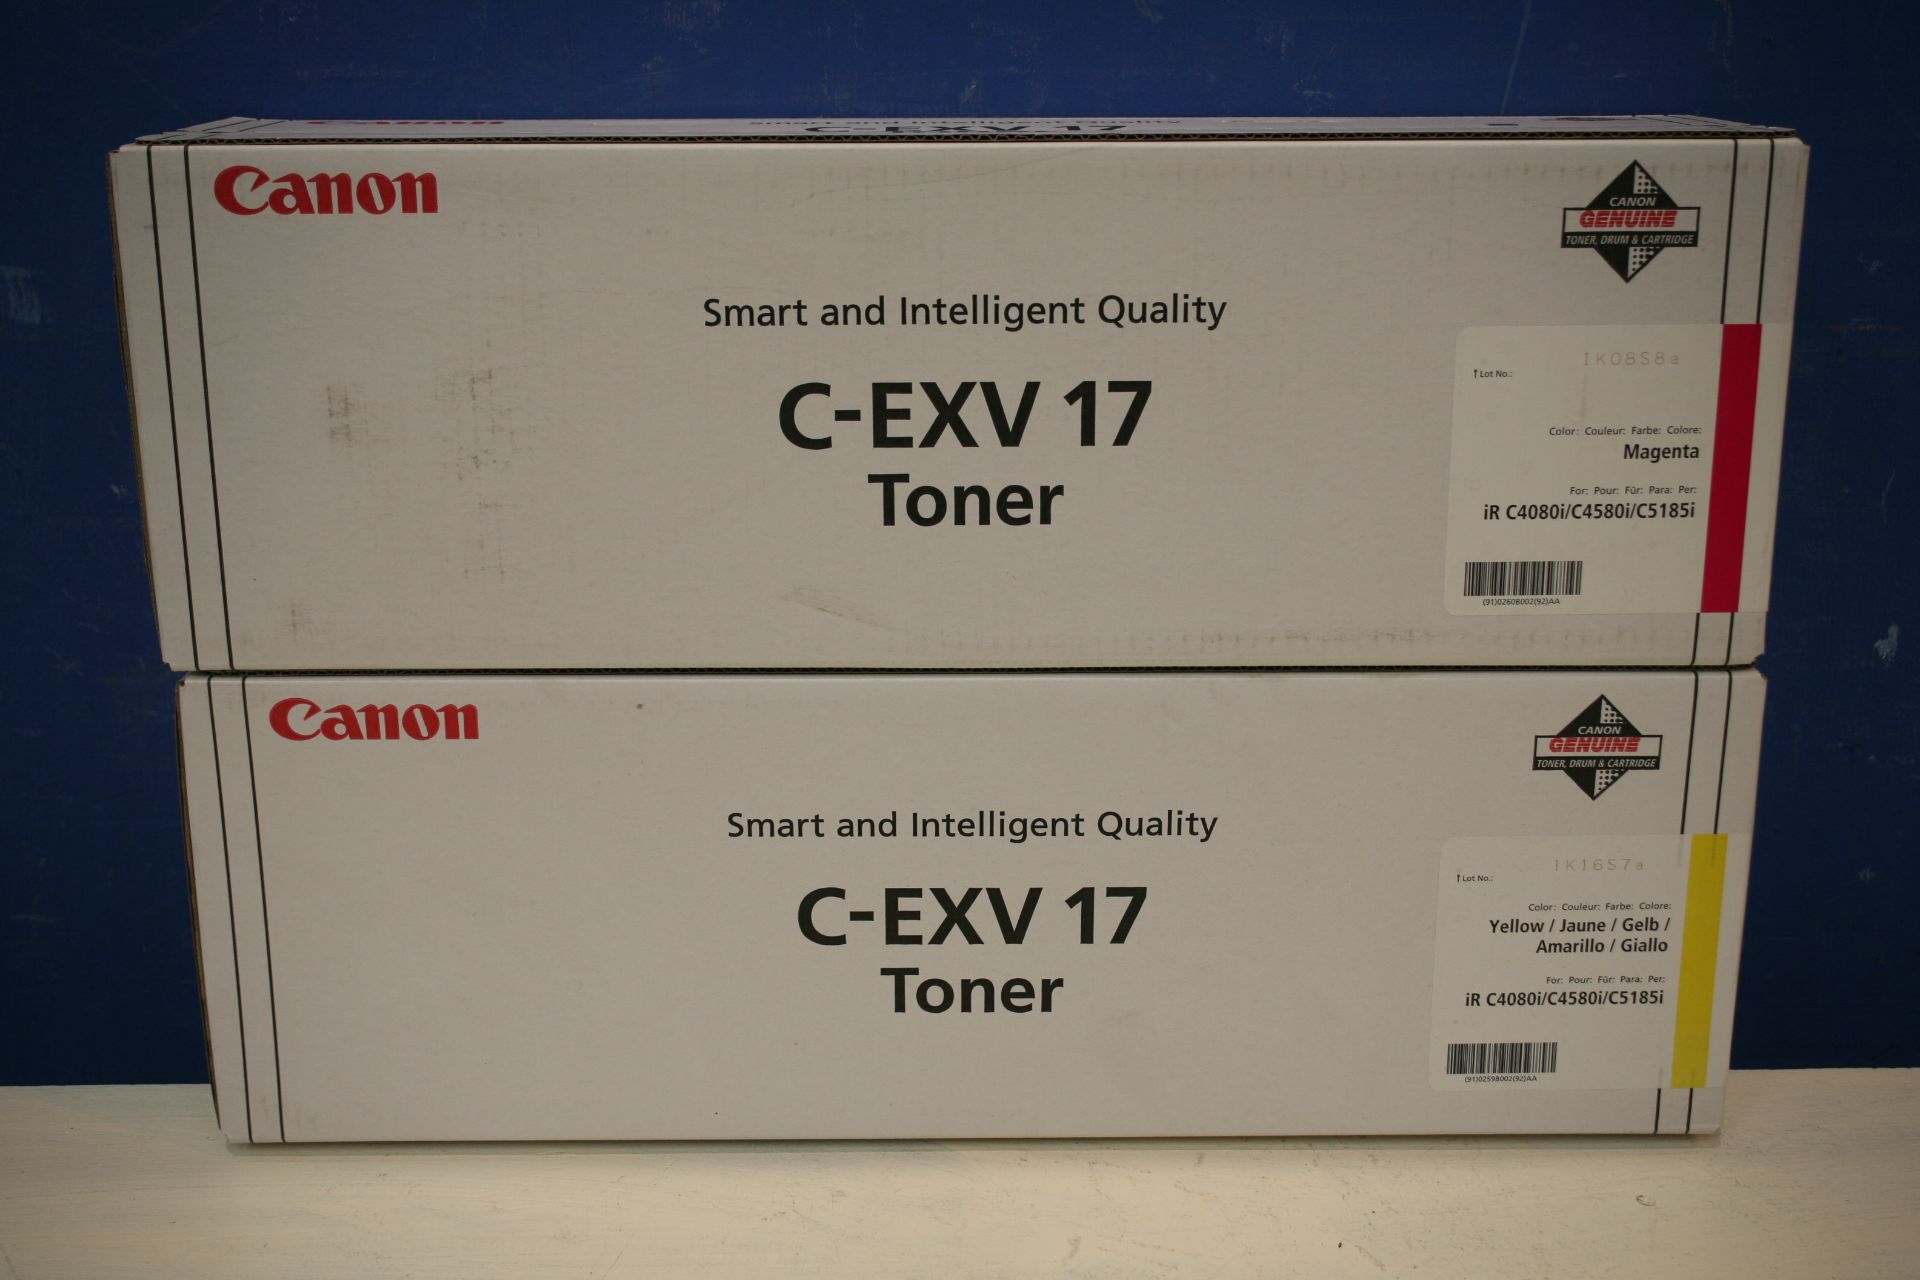 2x Canon Smart and Intelligent Quality C-EXV 17 Toner